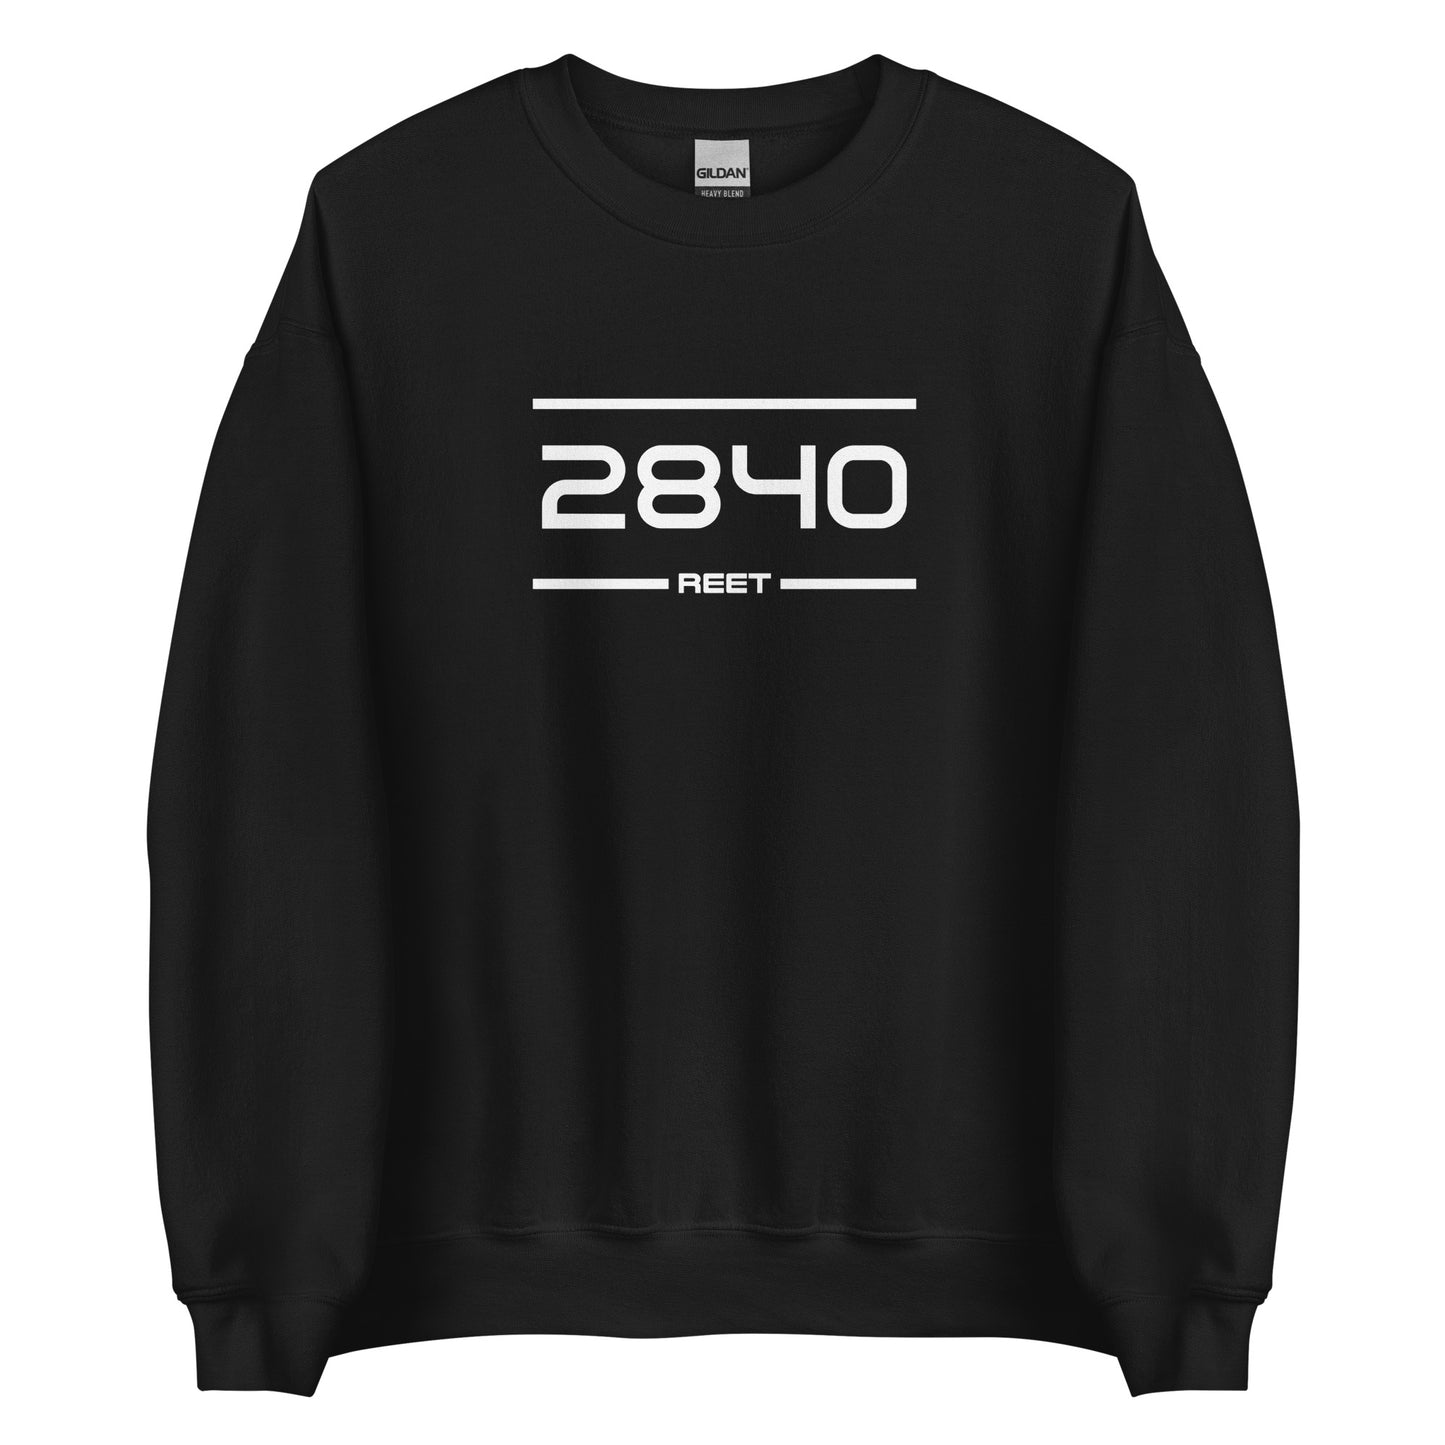 Sweater - 2840 - Reet (M/V)